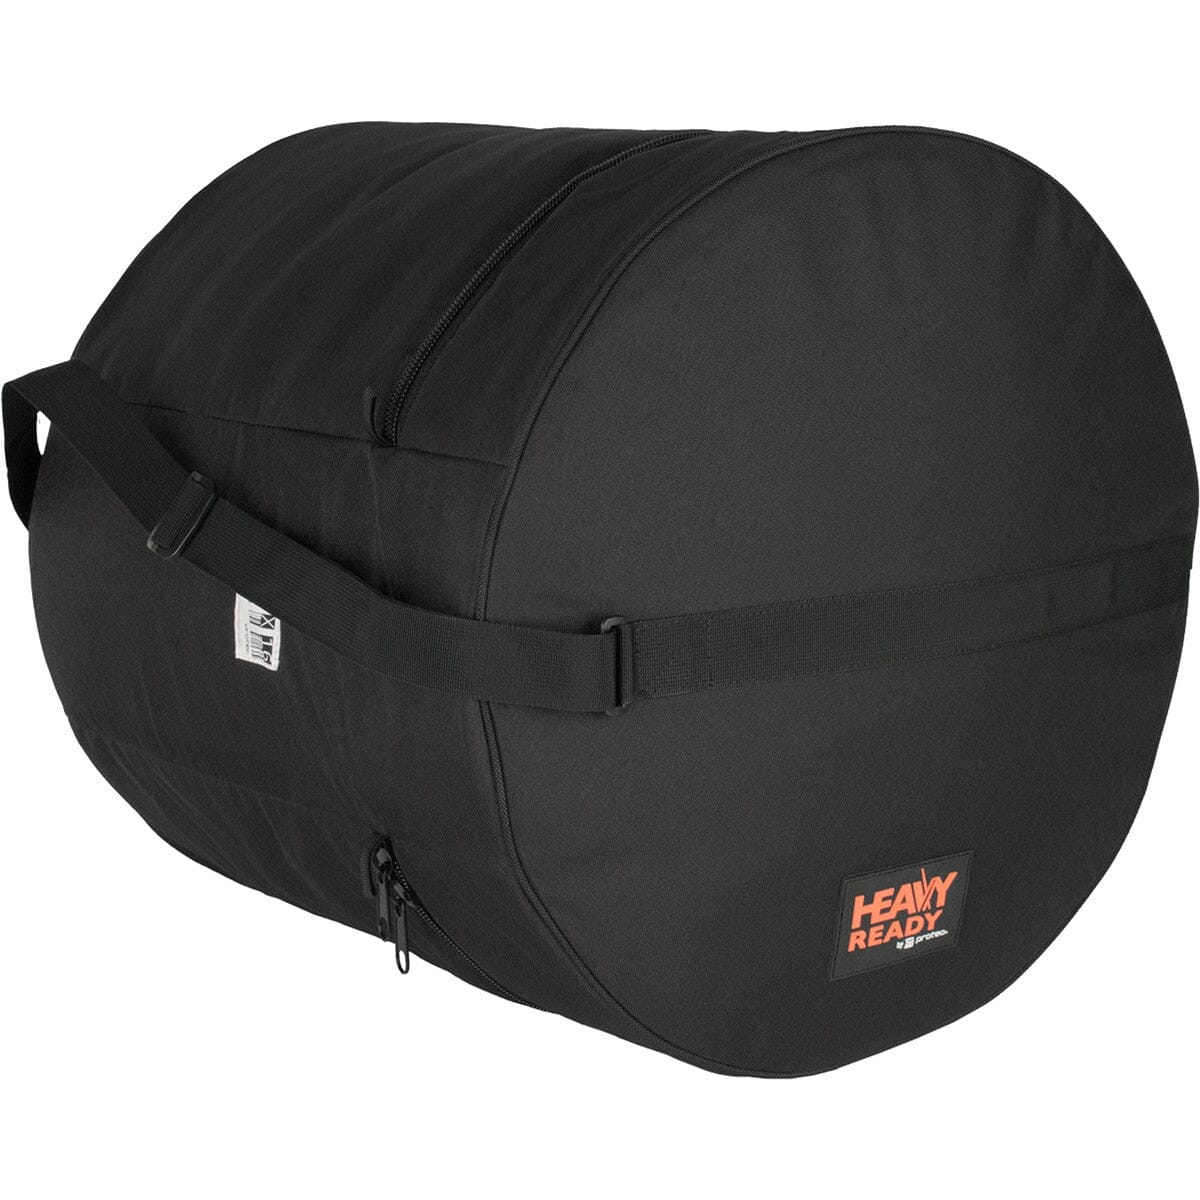 Protec Heavy Ready Series Drum Bag, Tom 16"H x 18"D (HR1618) NEW CASES Protec 